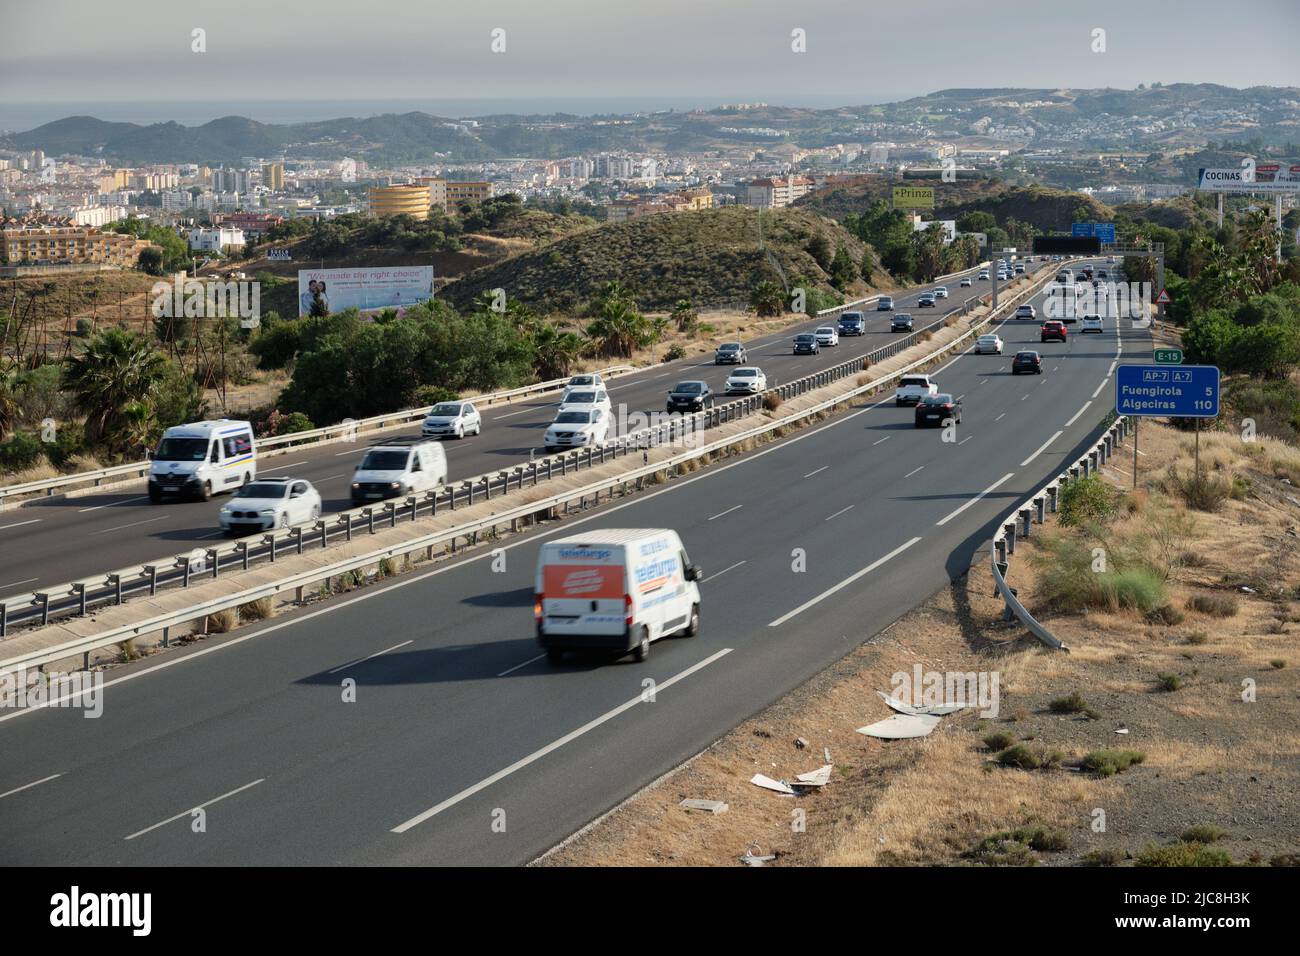 Traffic on motorway AP-7, autovia del mediterraneo, Malaga province, Spain. Stock Photo